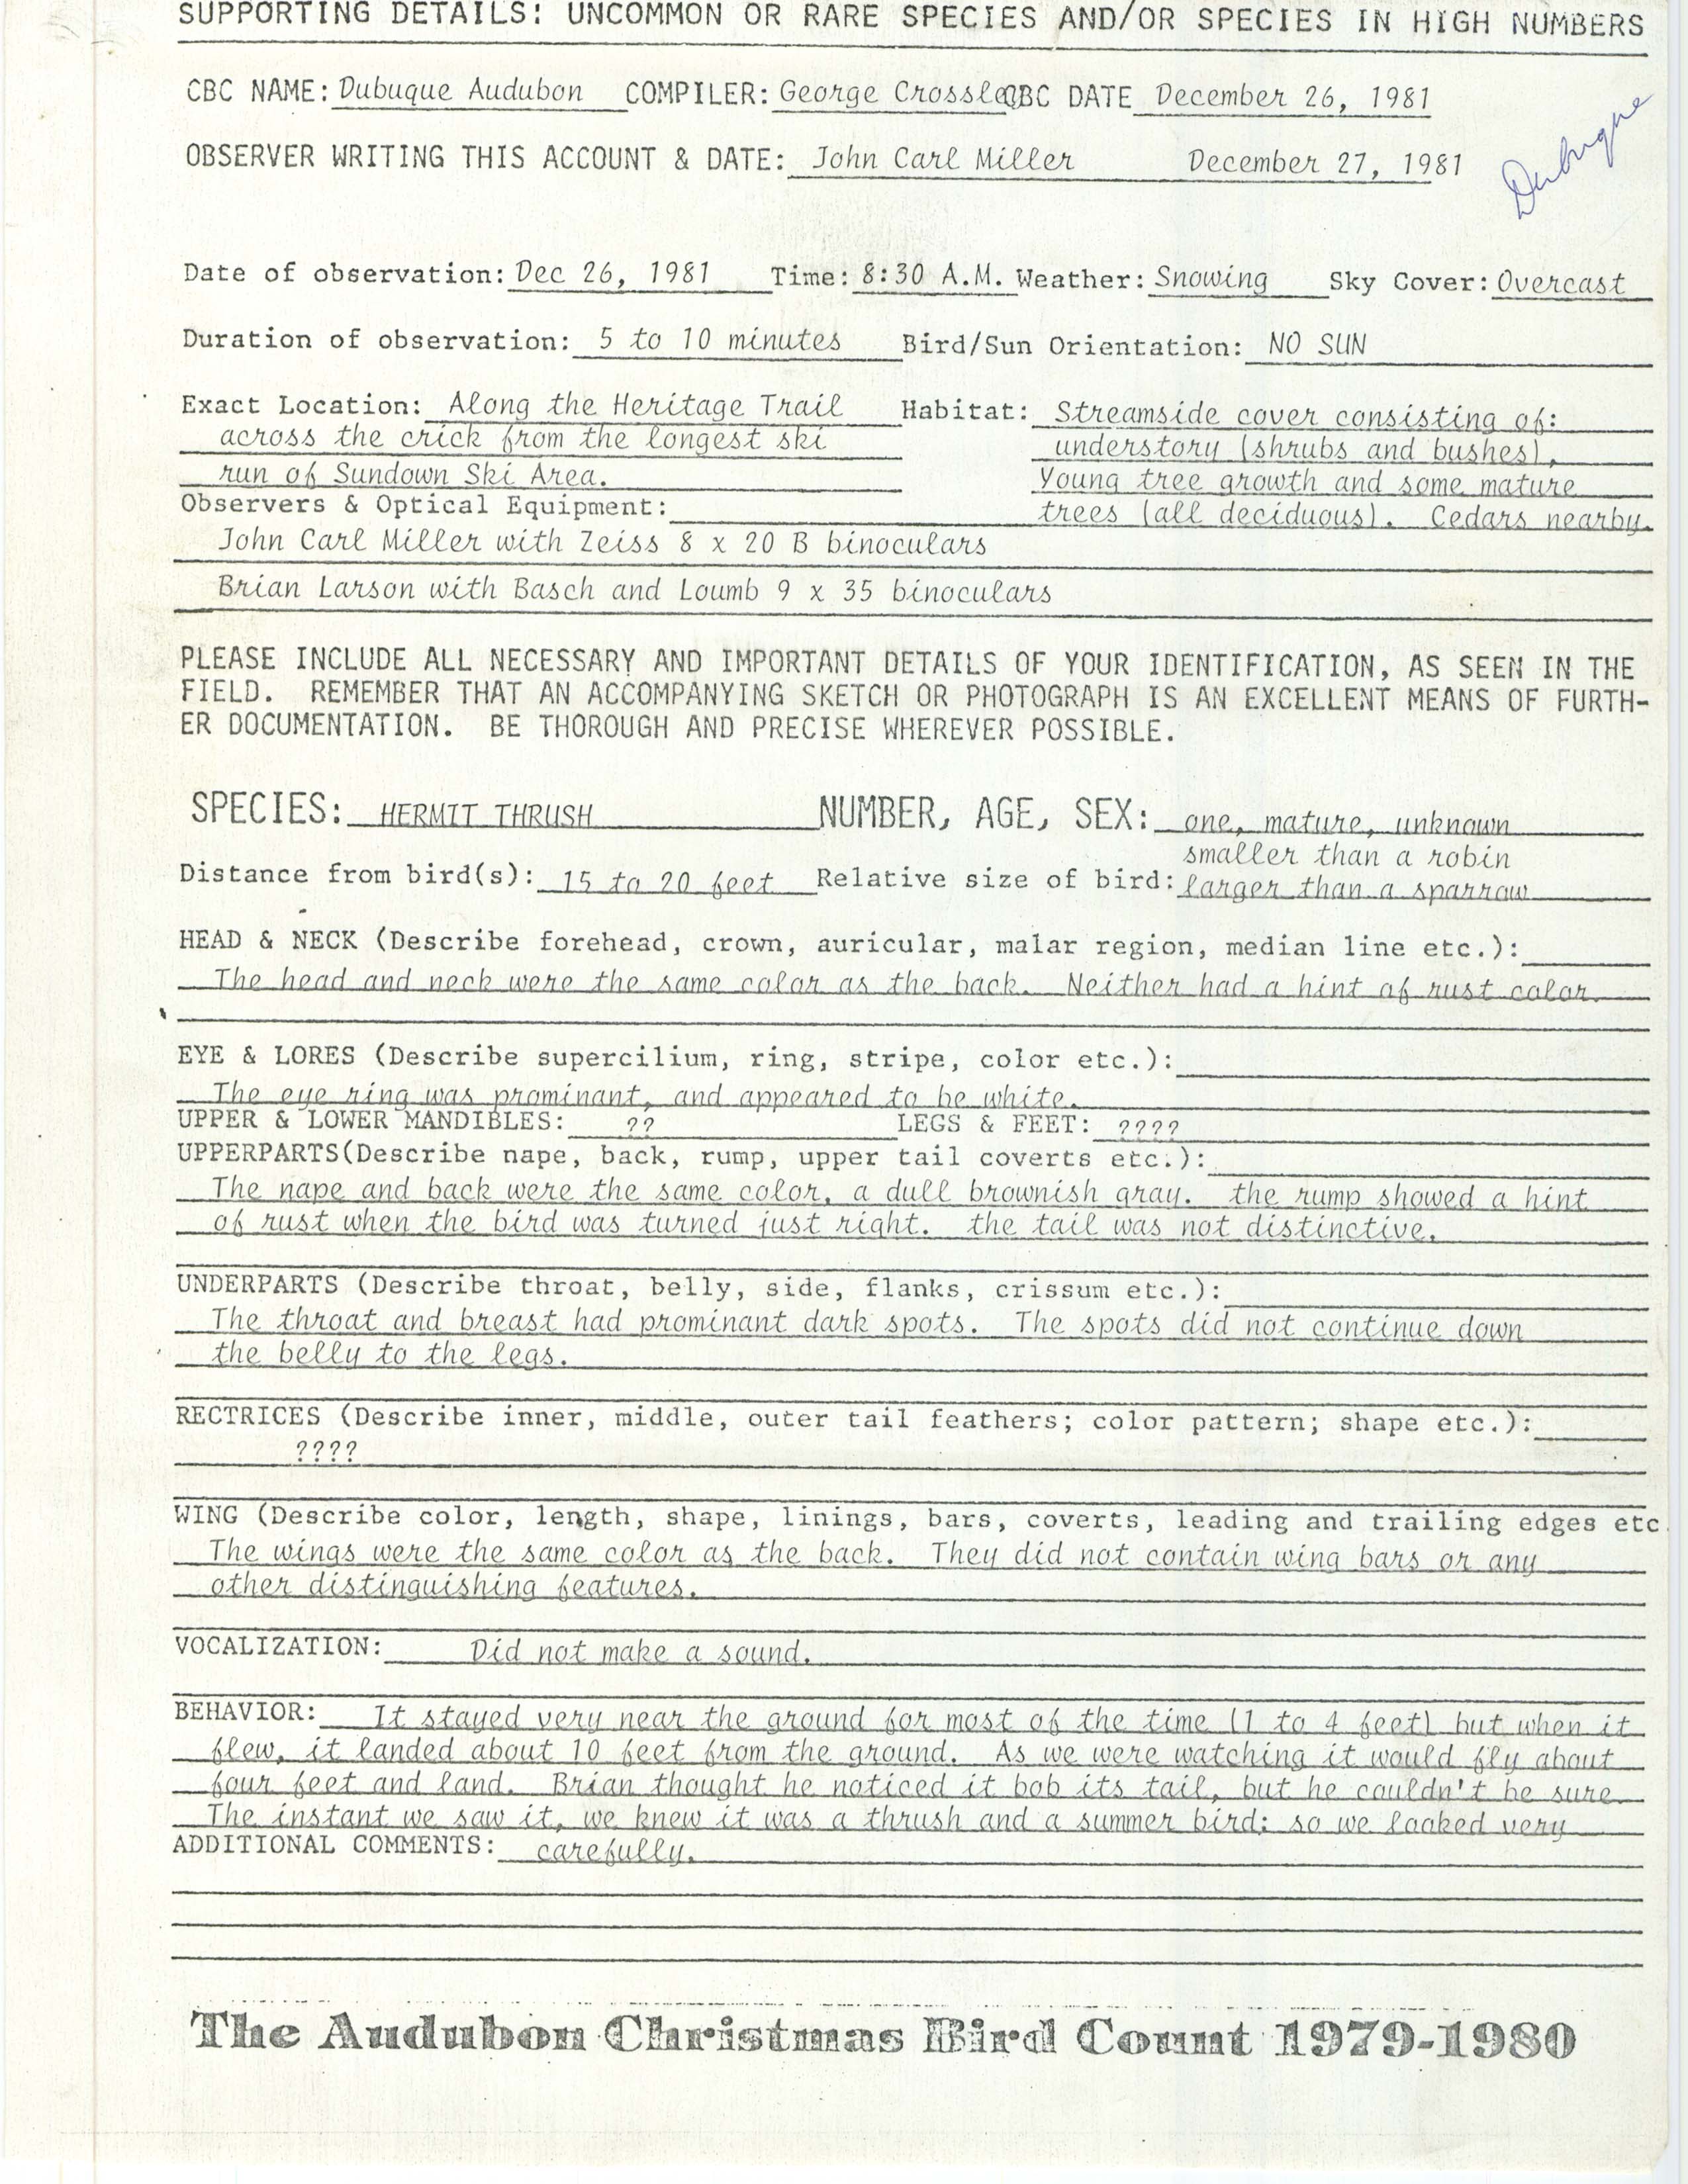 Rare bird documentation form for Hermit Thrush at Sundown Ski Area near Asbury, 1981